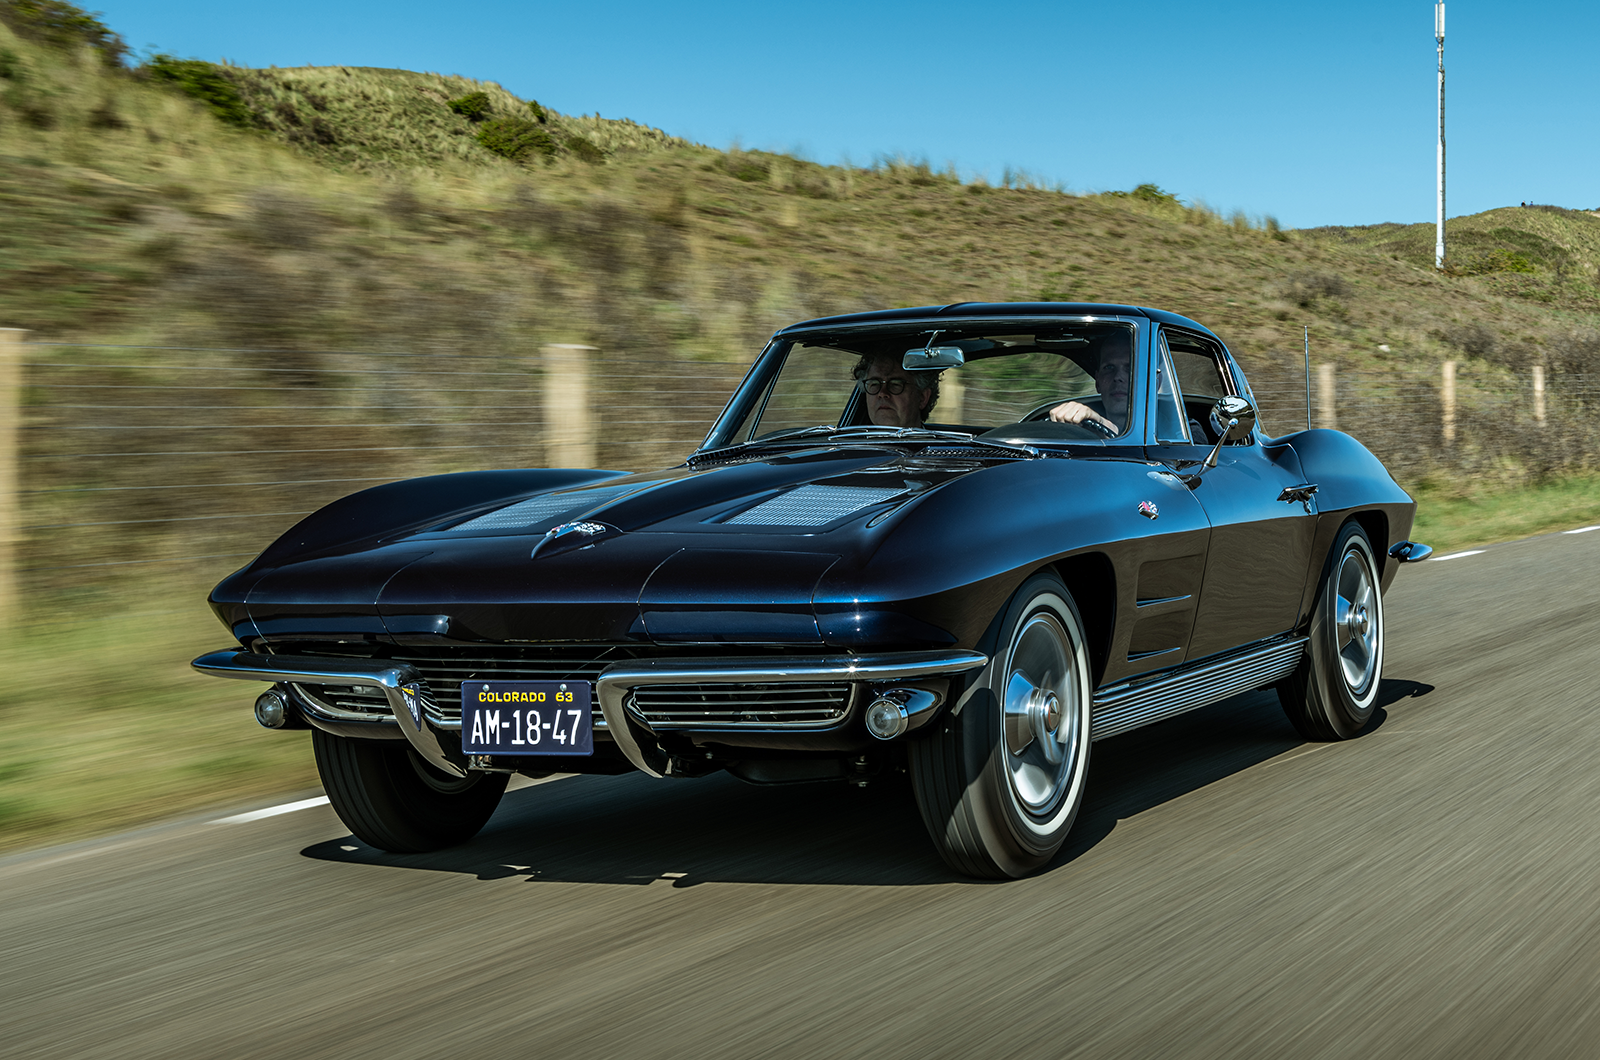 Classic & Sports Car – Chevrolet Corvette C2 Sting Ray: American beauty